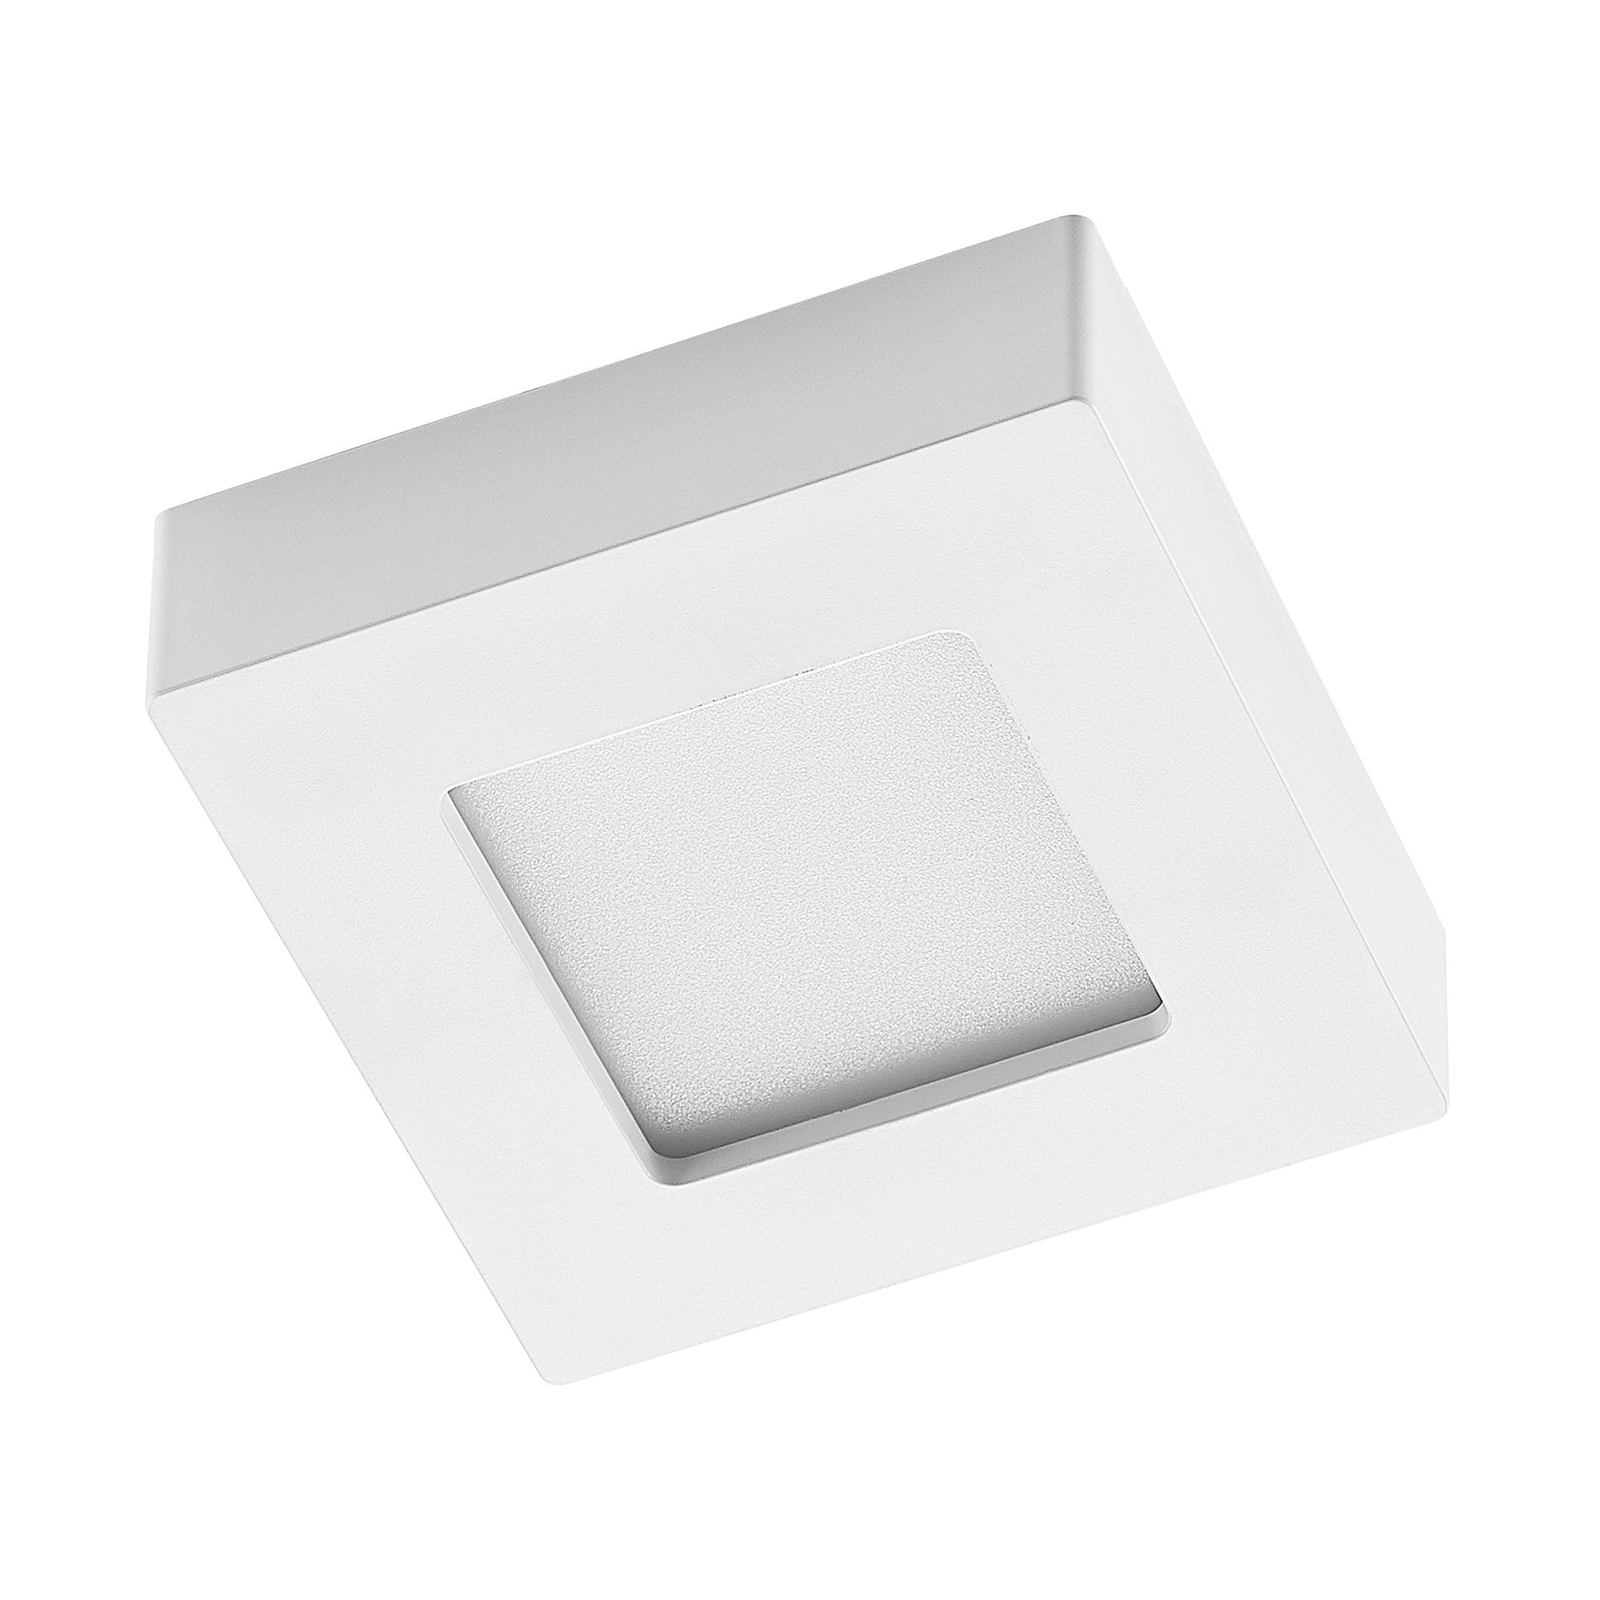 Prios Alette stropné LED svietidlo, biele, 12,2 cm